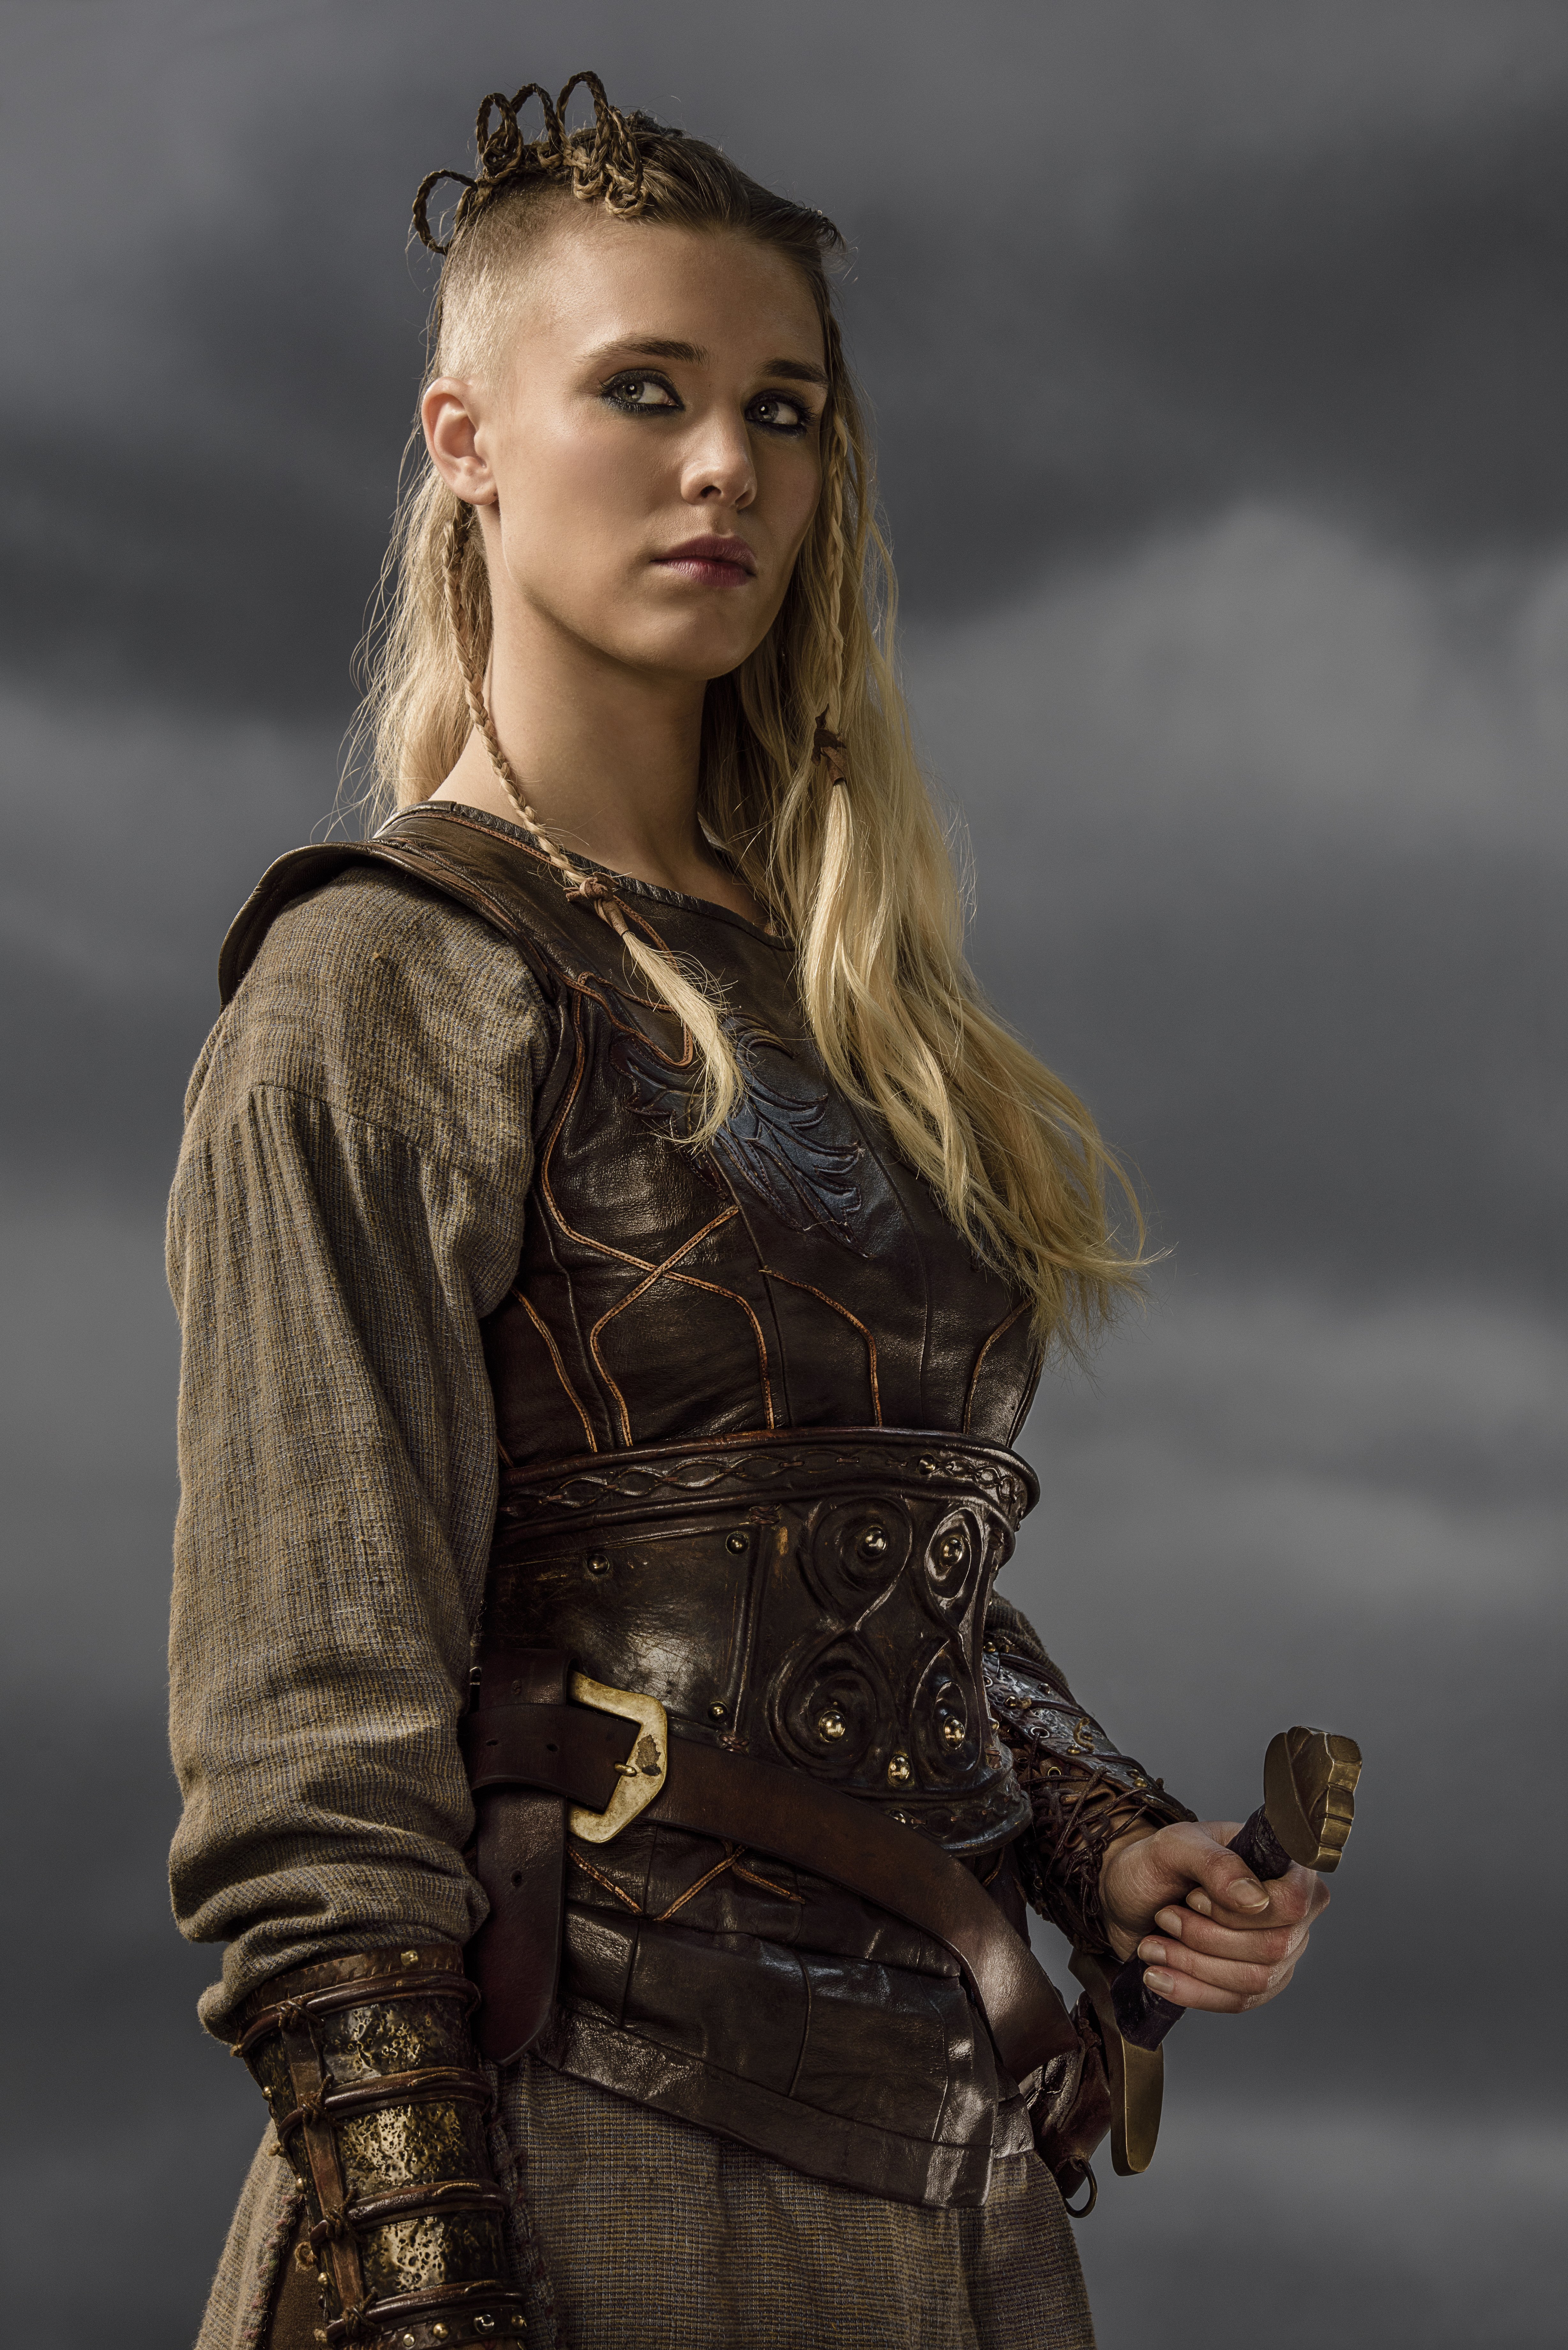 Vikings Porunn Season 3 Official Picture - Vikings (TV Series